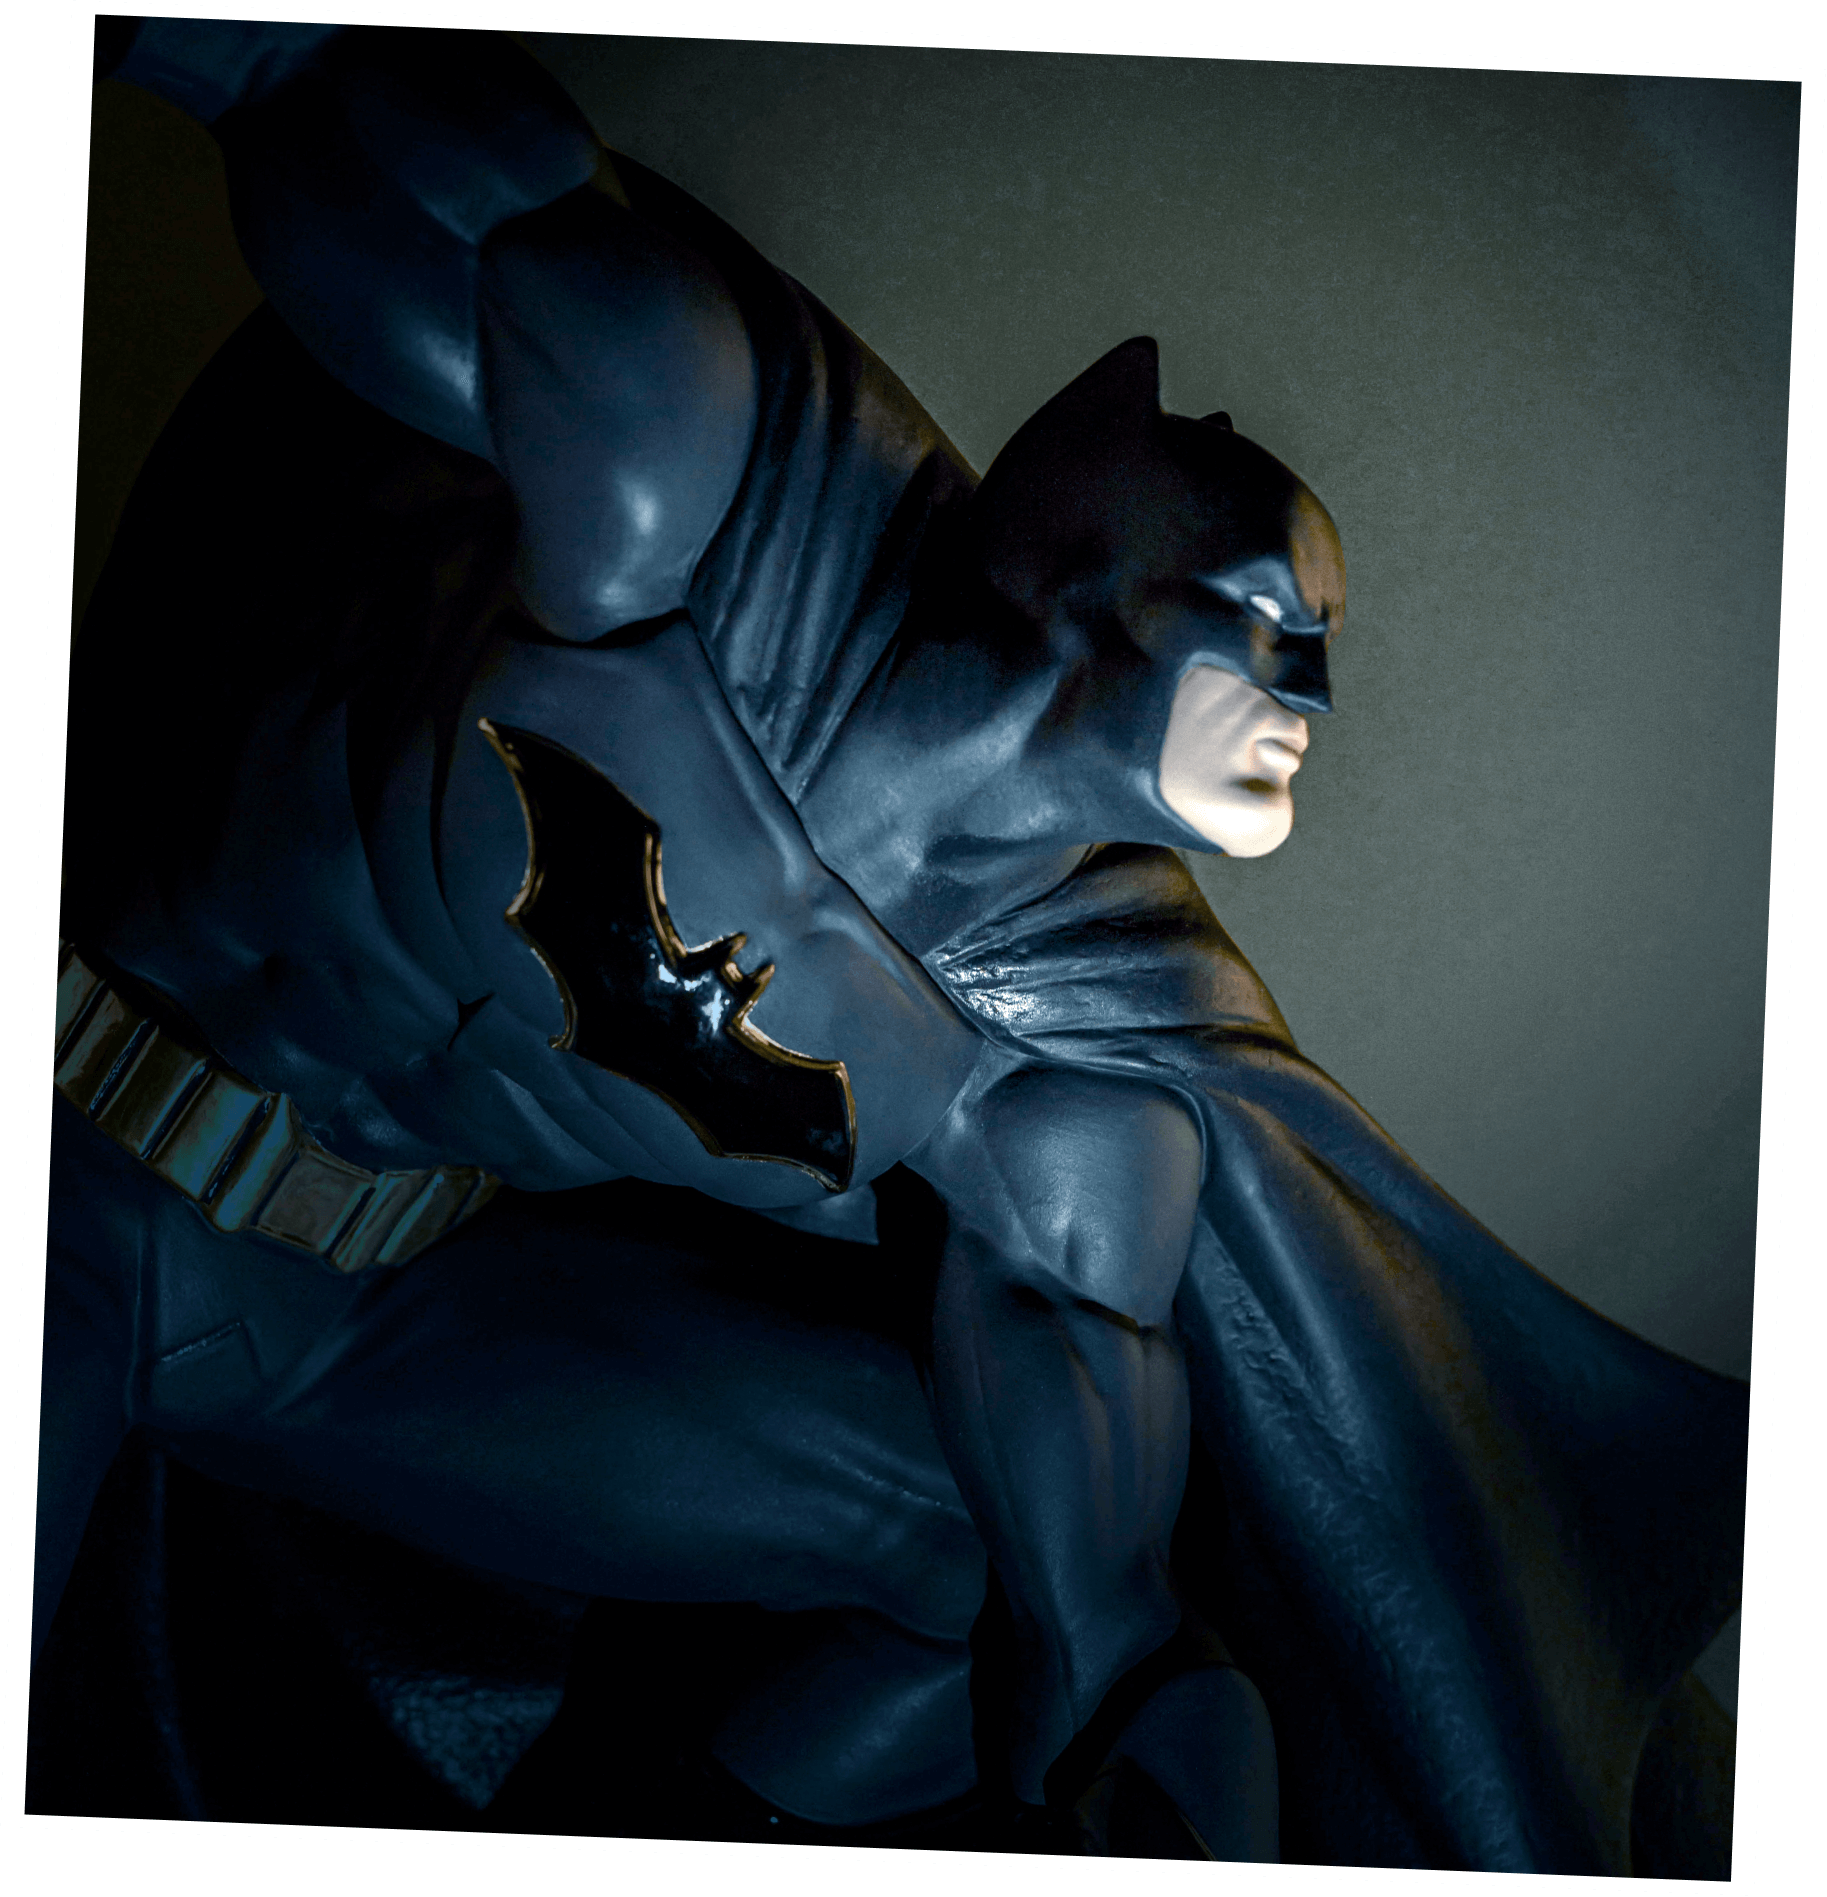 Batman sculpture in a dark room